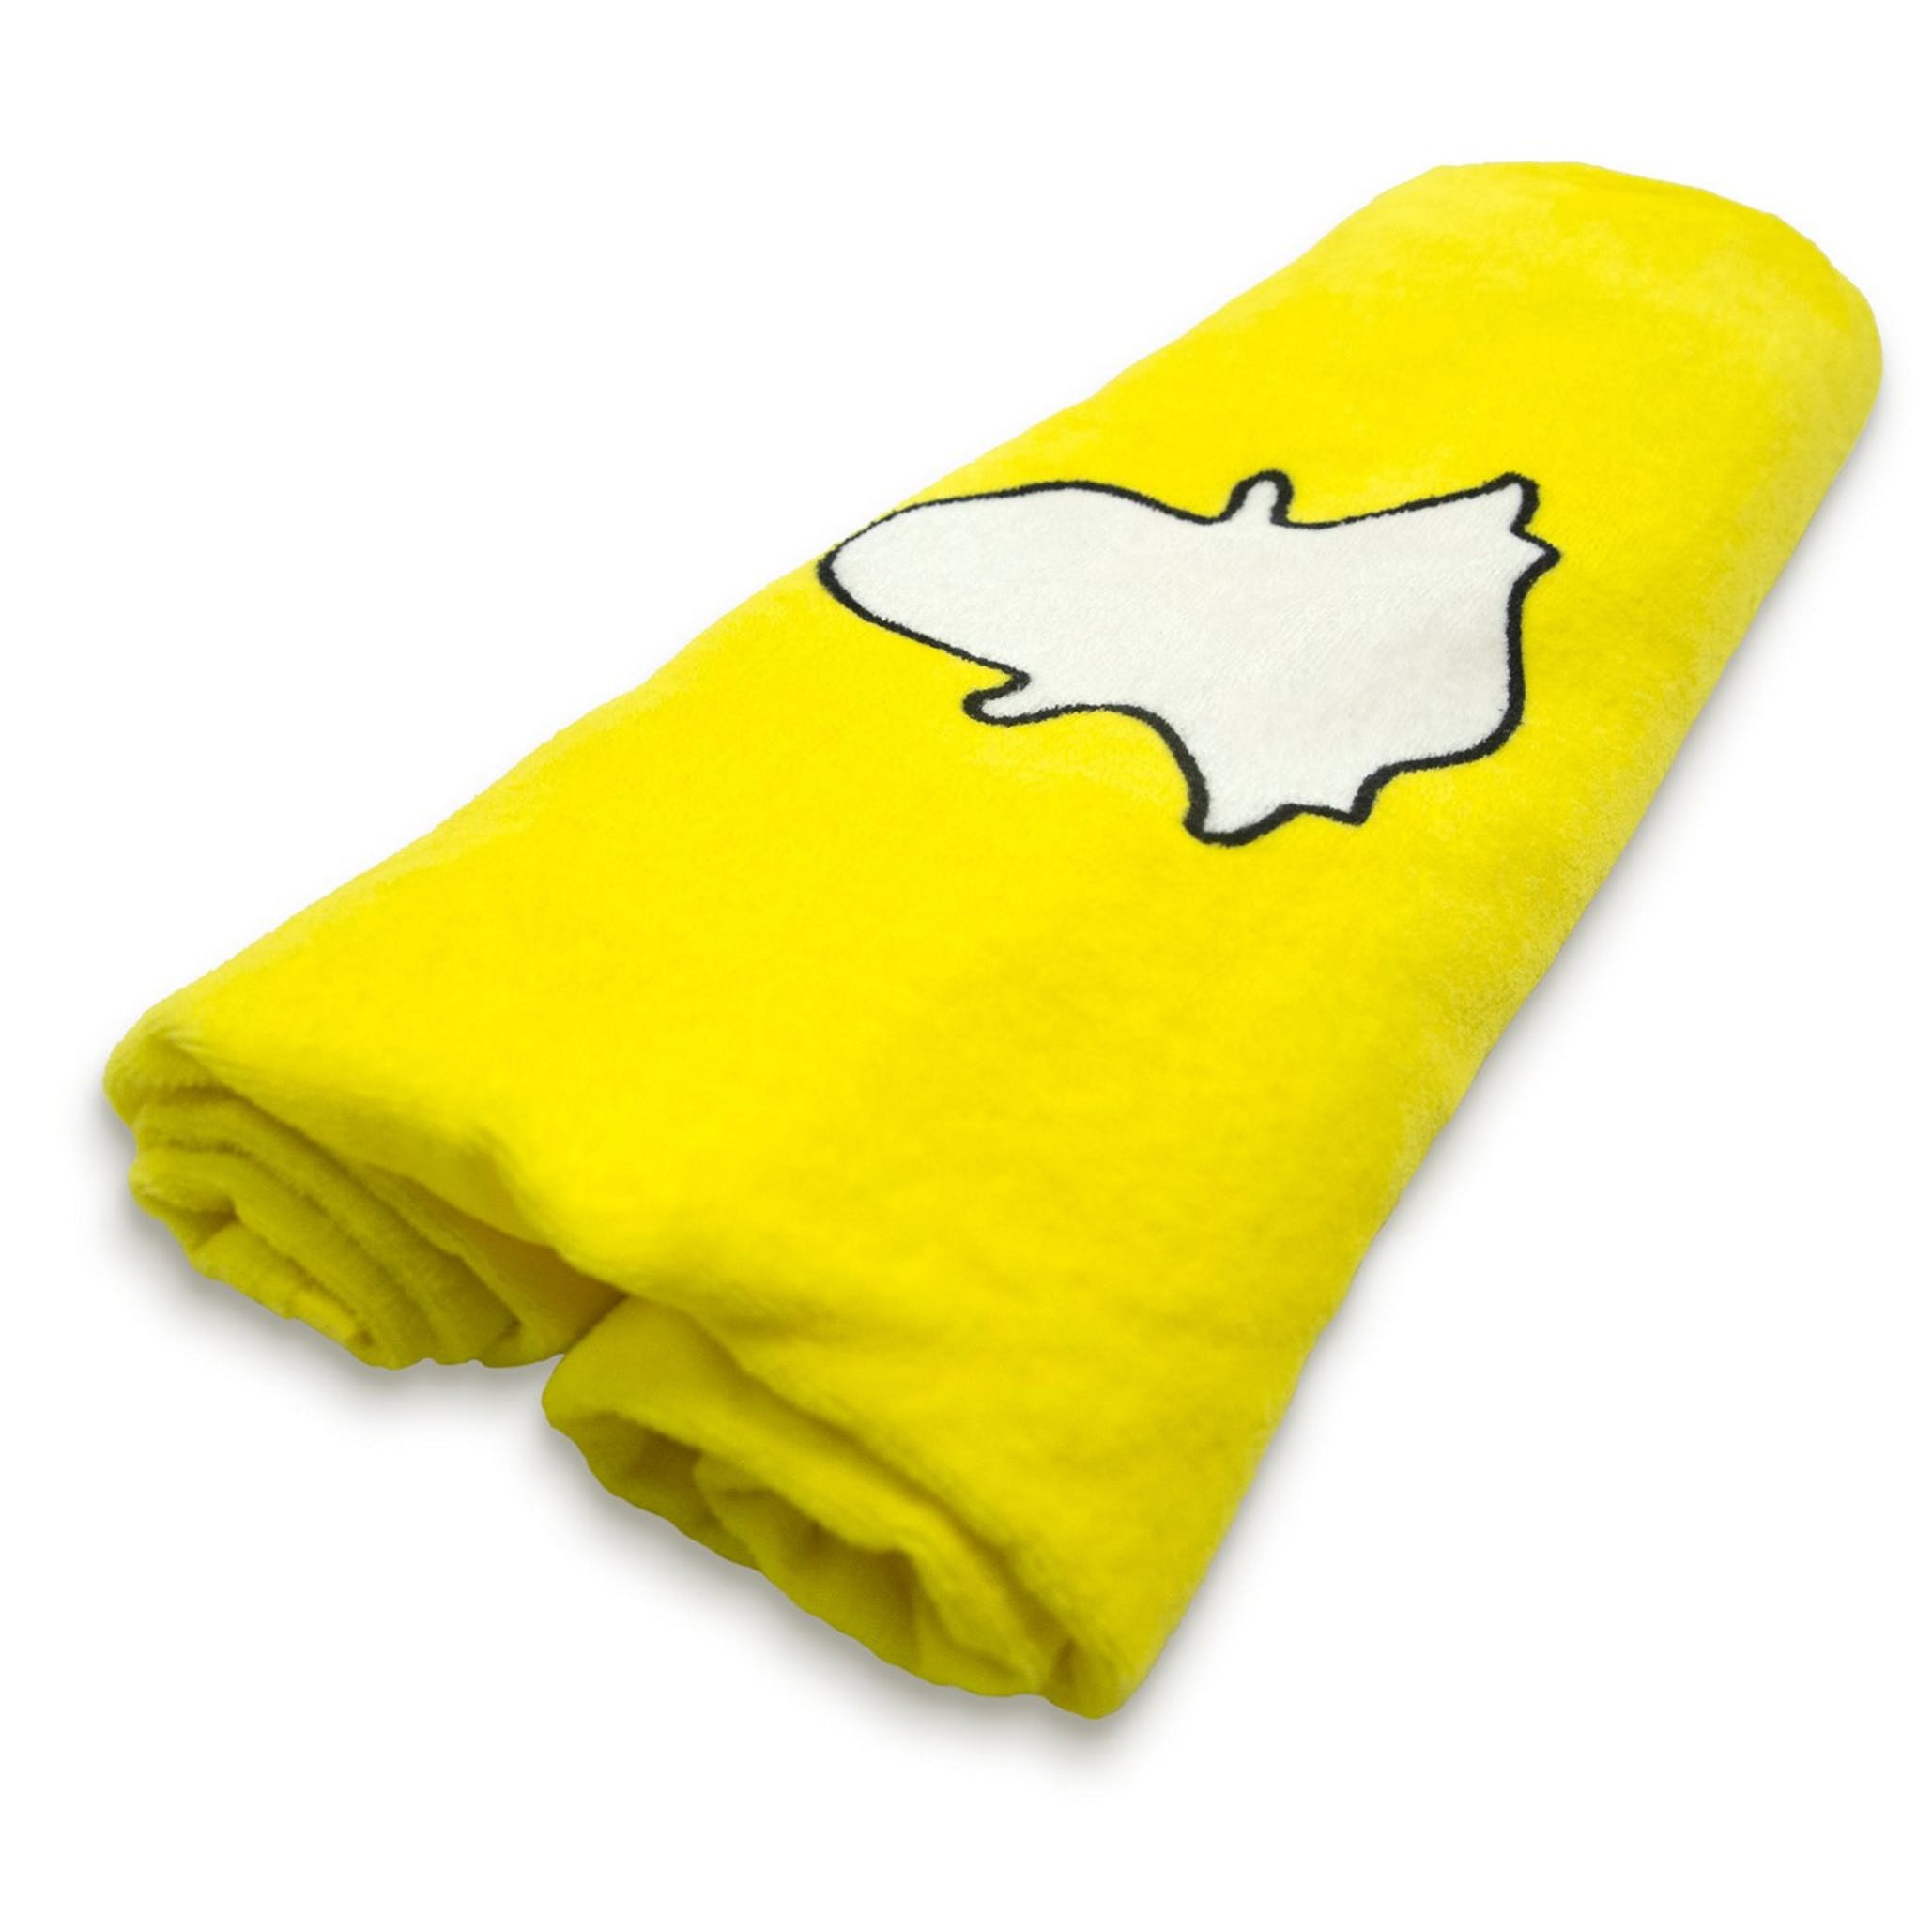 Official Snapchat Beach Towel media 2